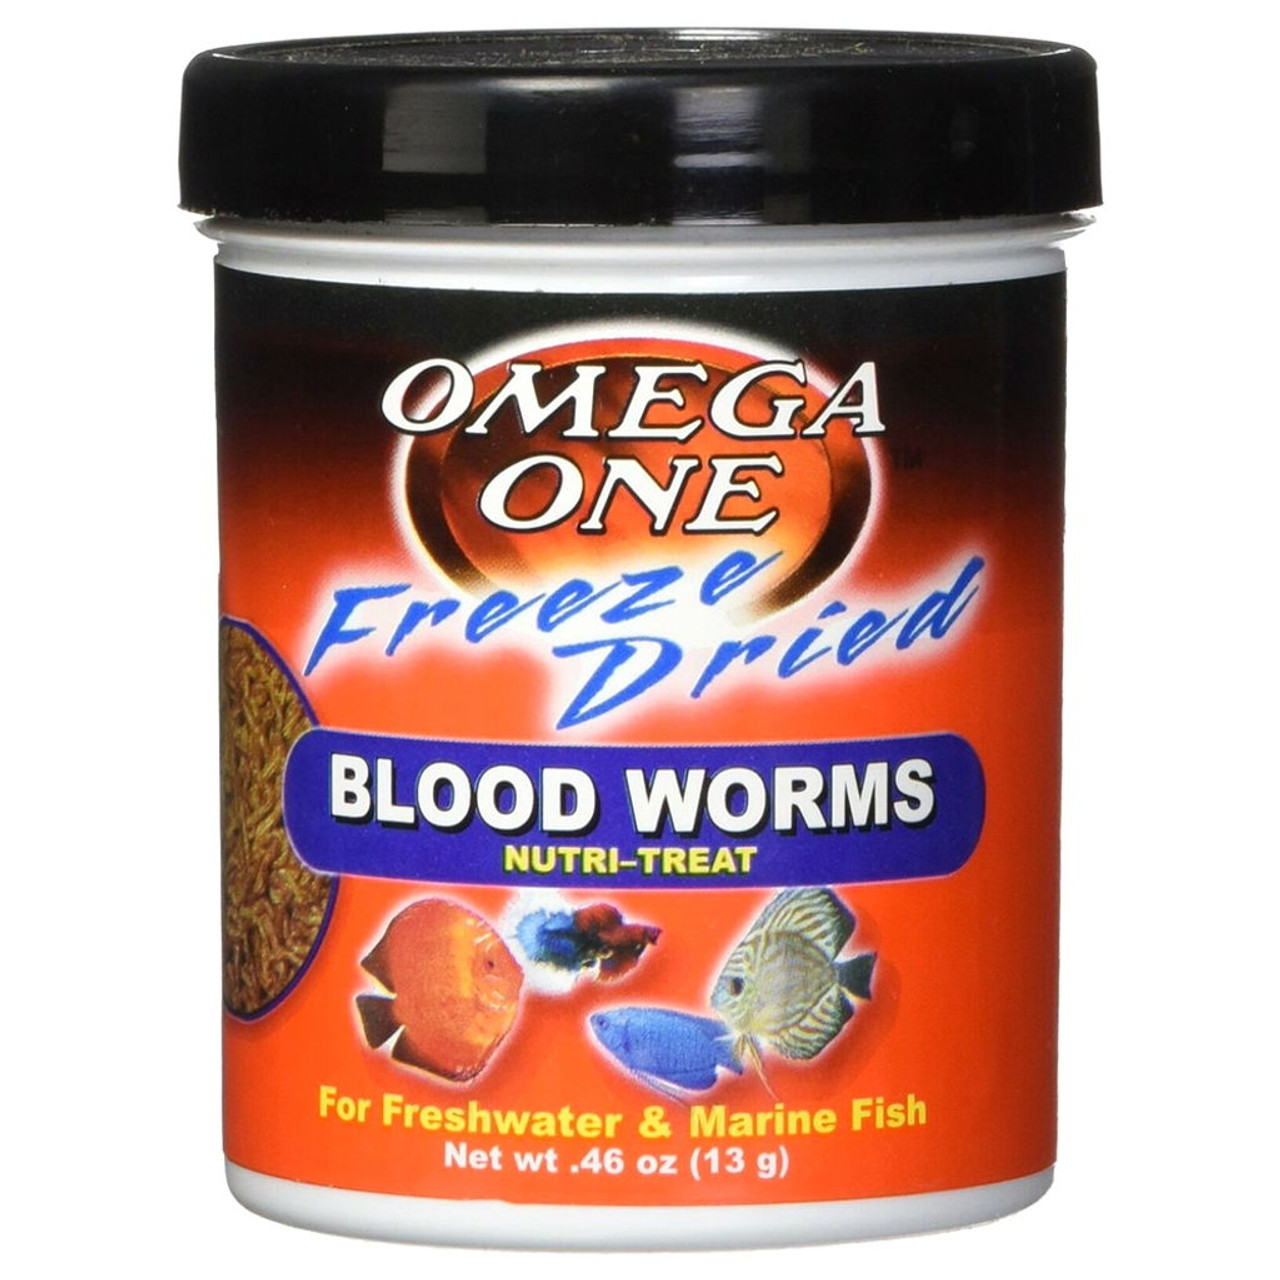 Omega One Freeze Dried Blood Worms Nutri Treat - 0.46 oz